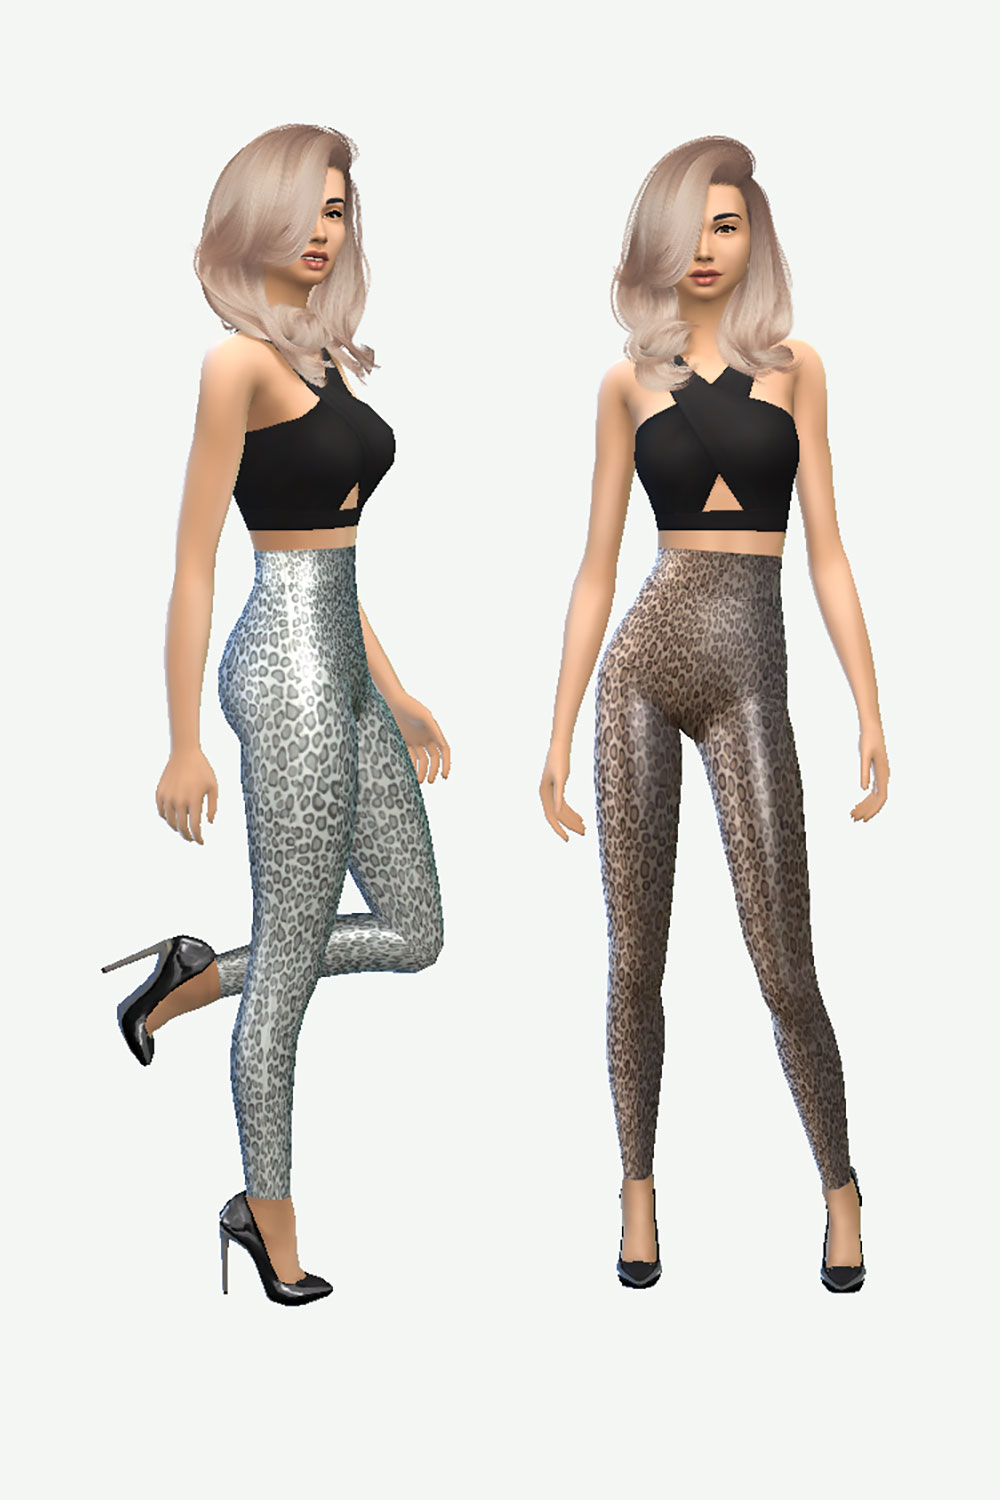 The Sims 4 CC Leopard Leggings